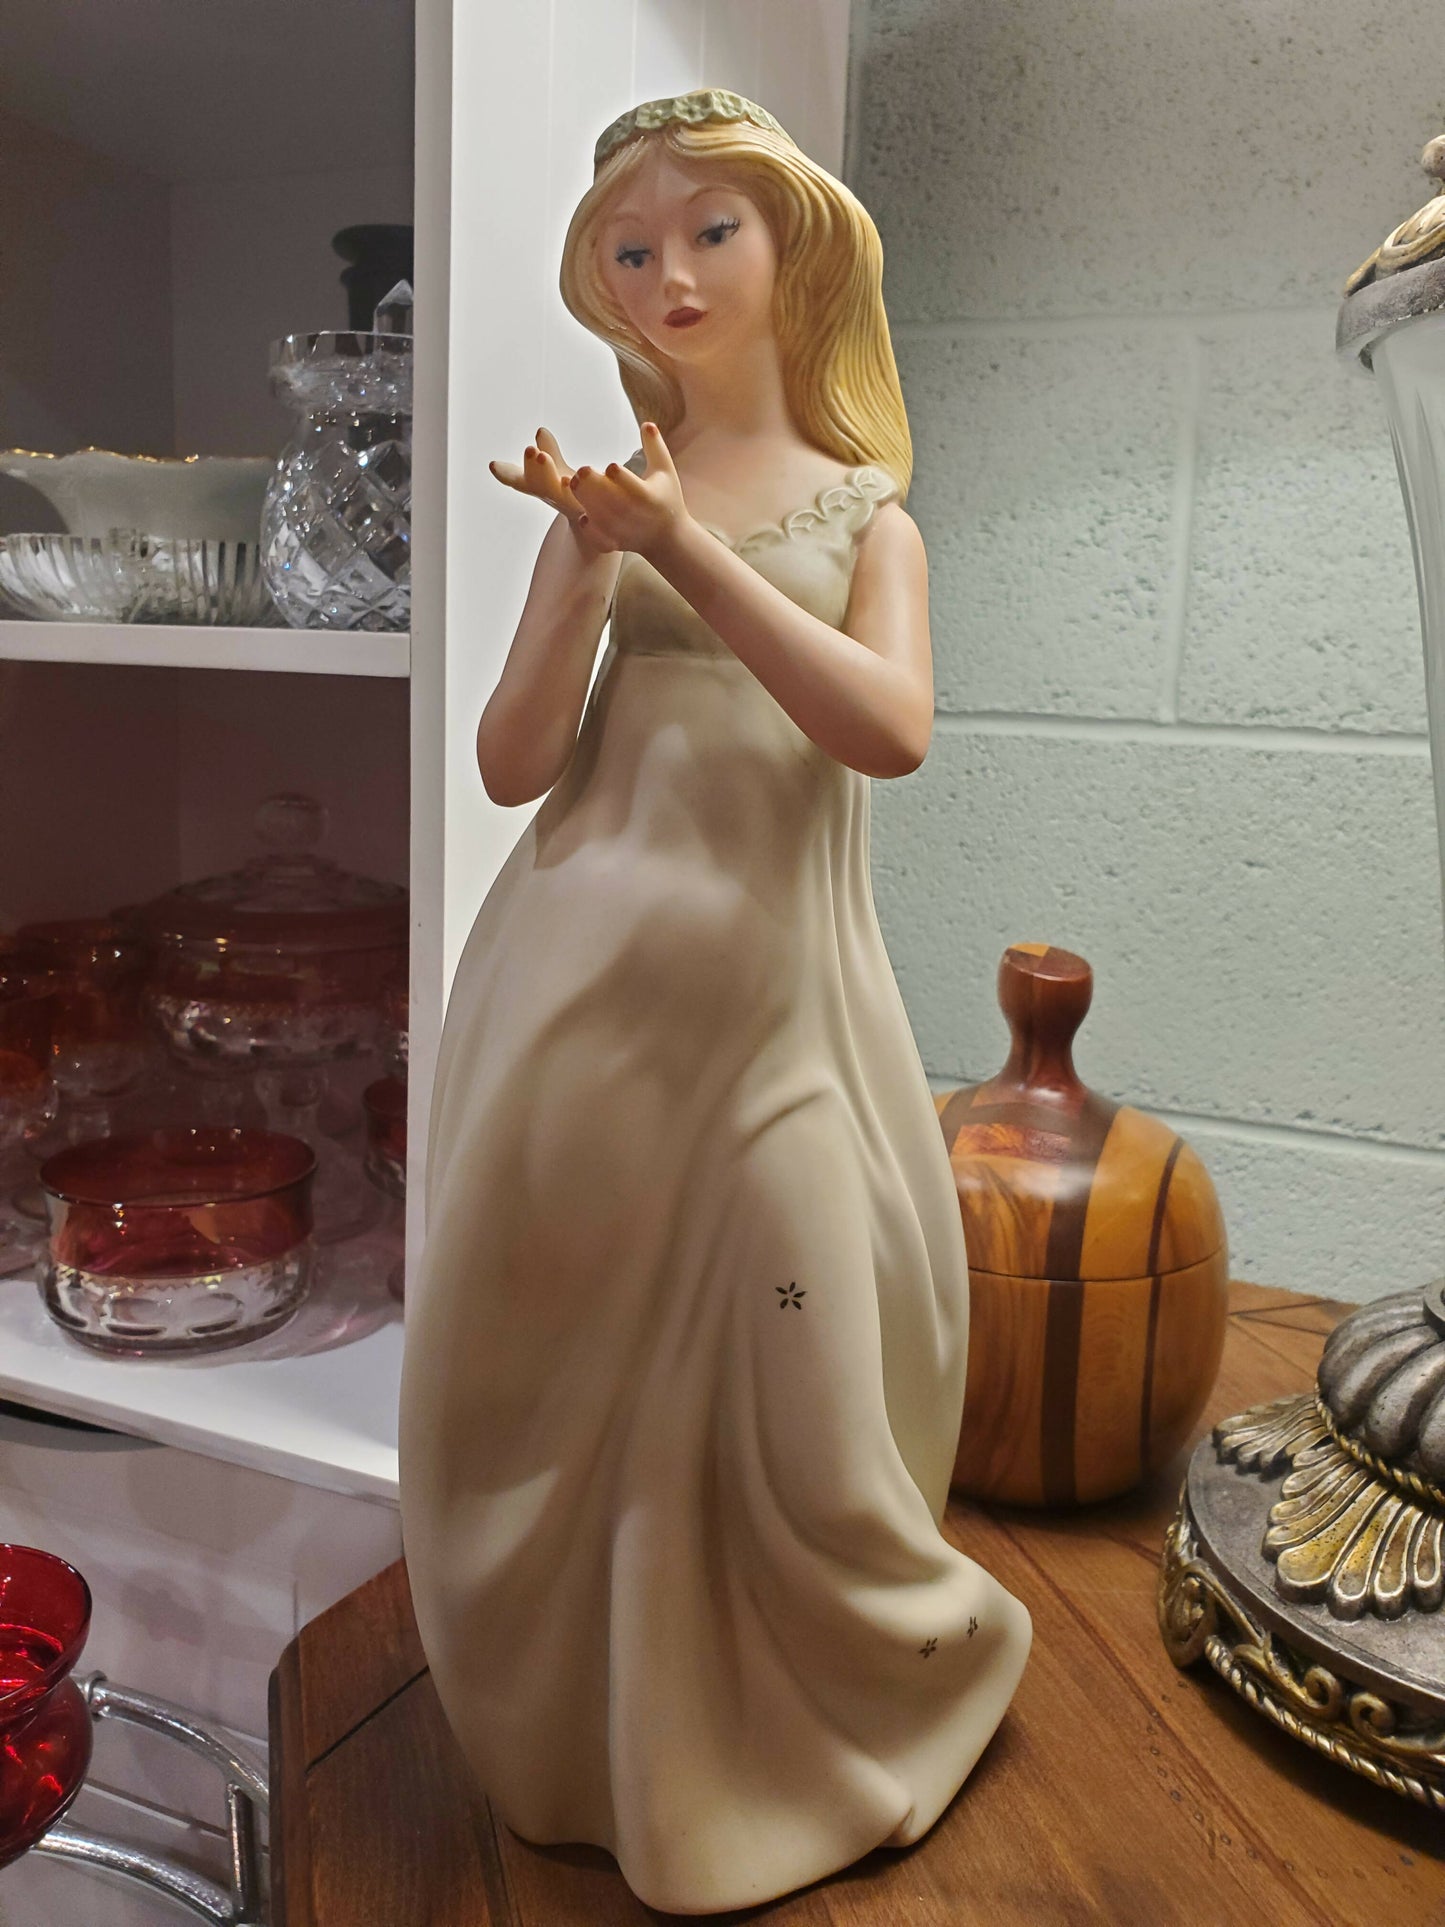 Porcelain doll figurine